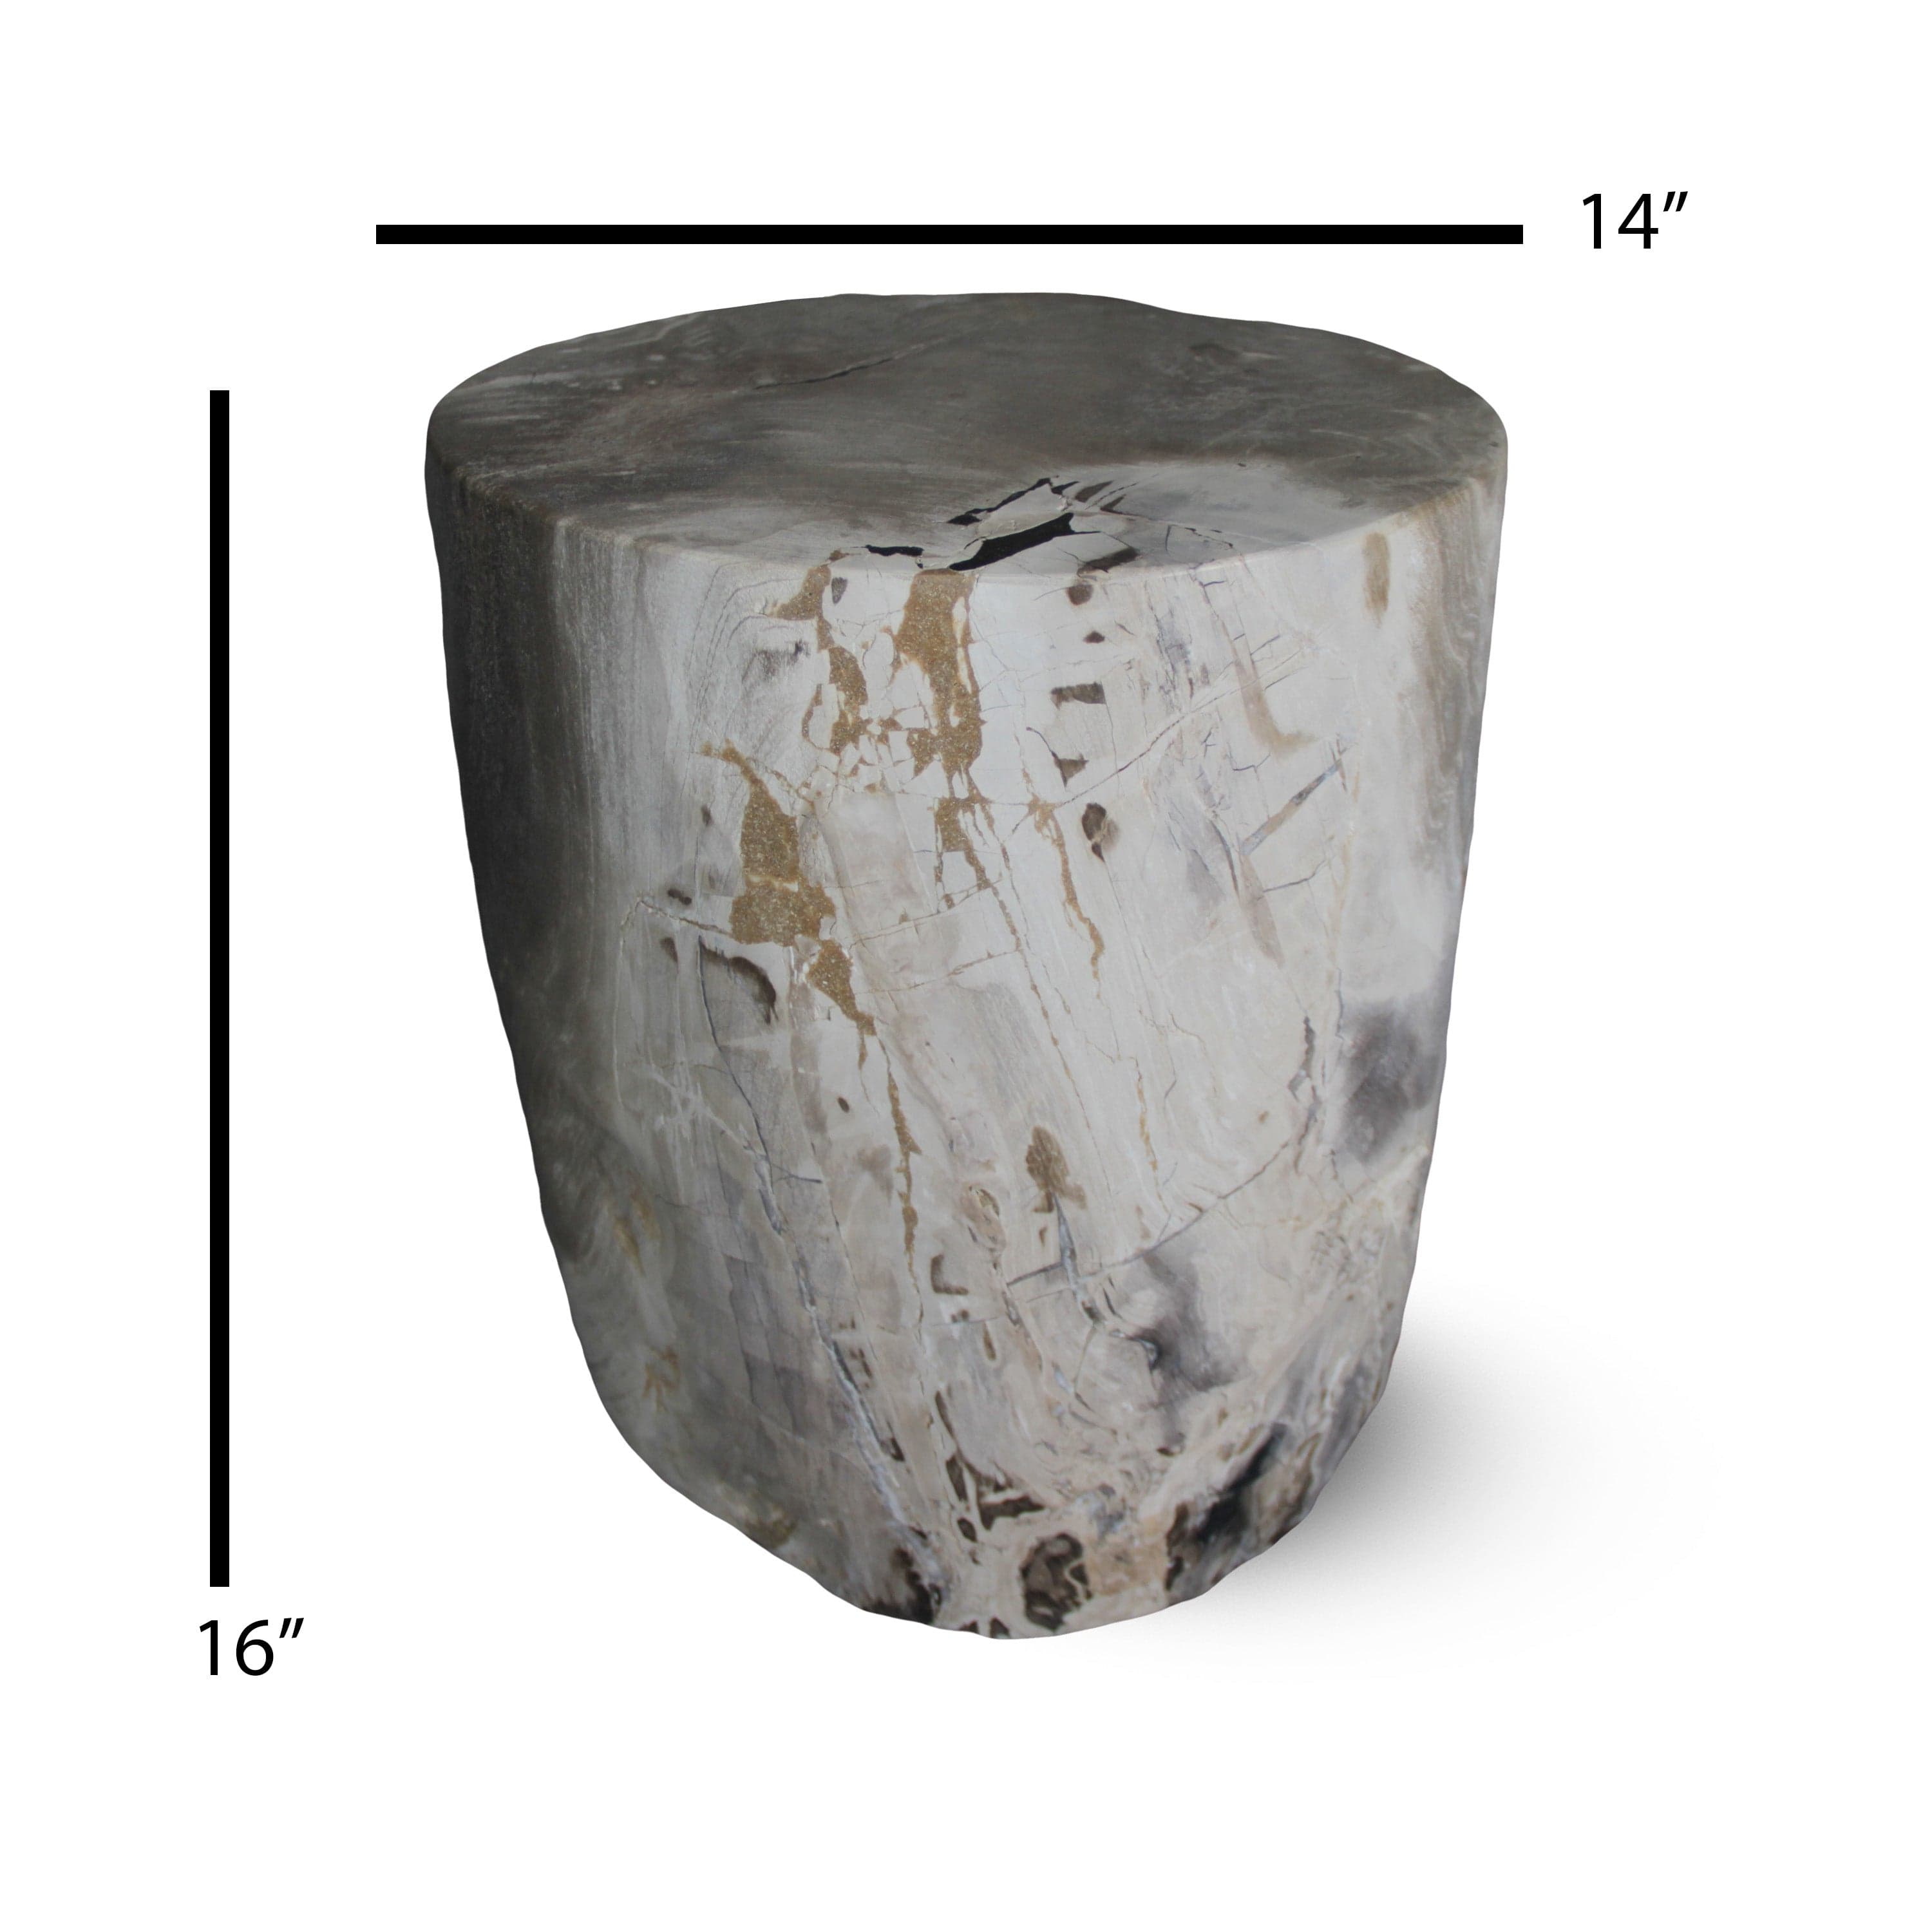 Kalifano Petrified Wood Petrified Wood Round Stump / Stool from Indonesia - 16" / 185 lbs PWS3400.011